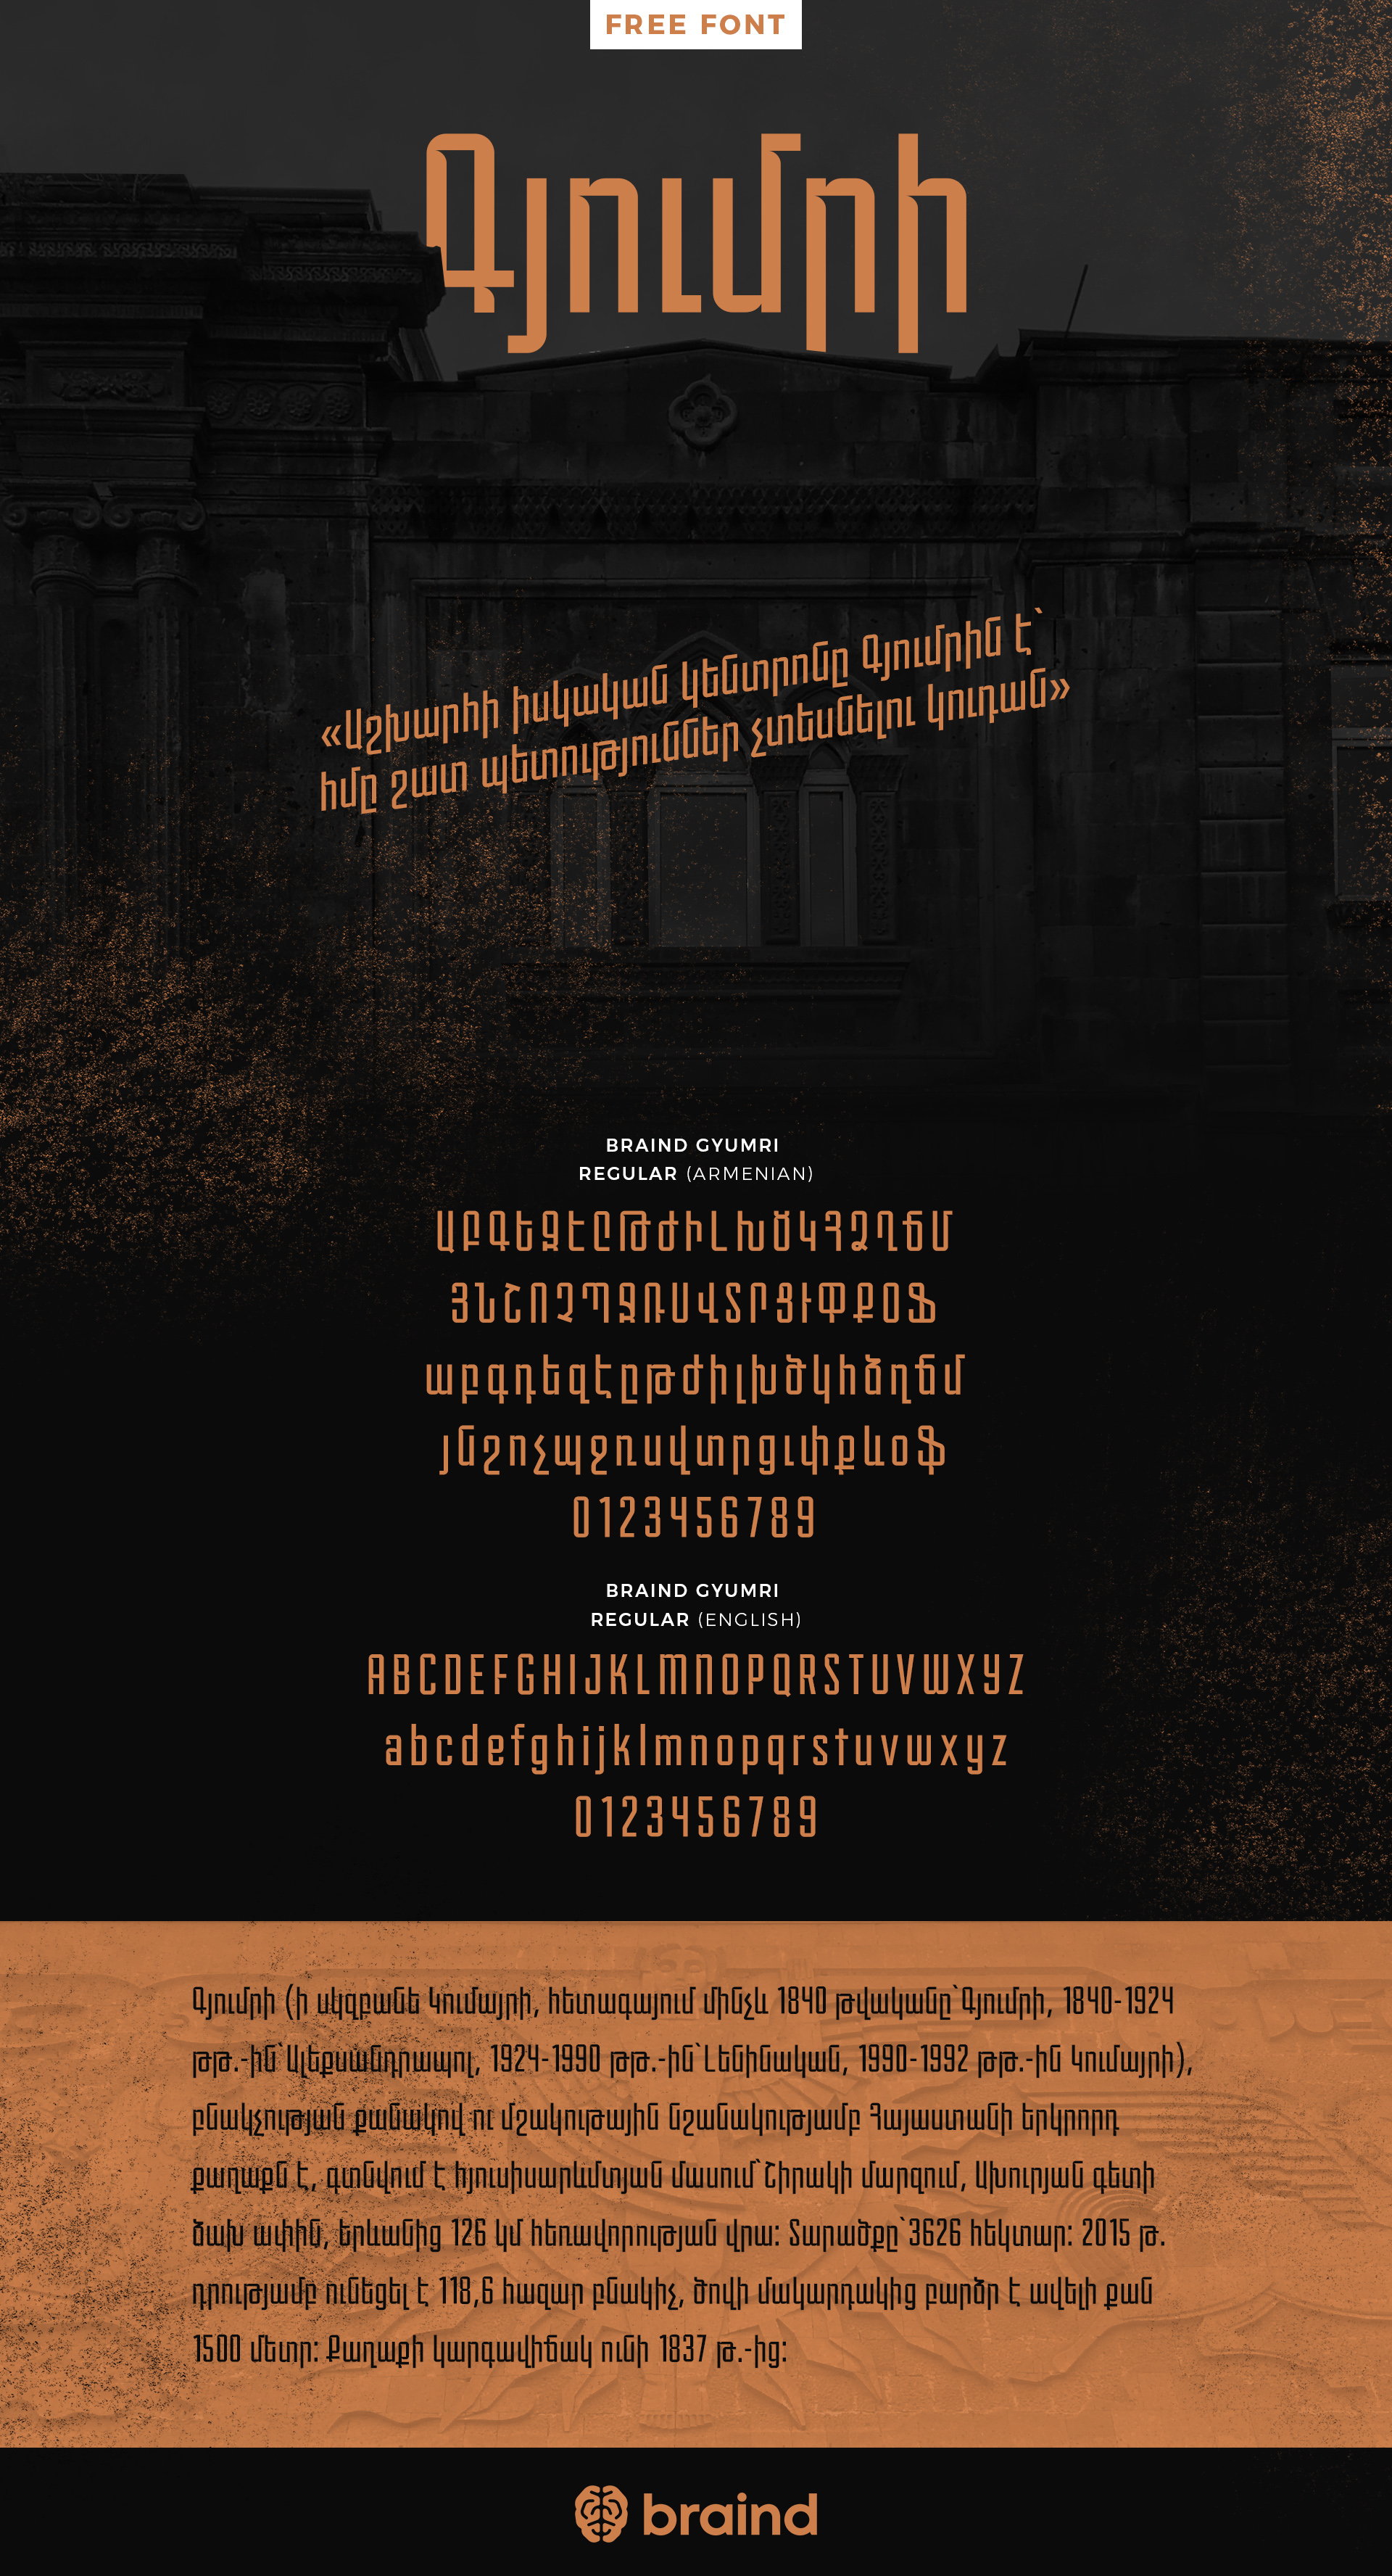 armenian font typefaces free